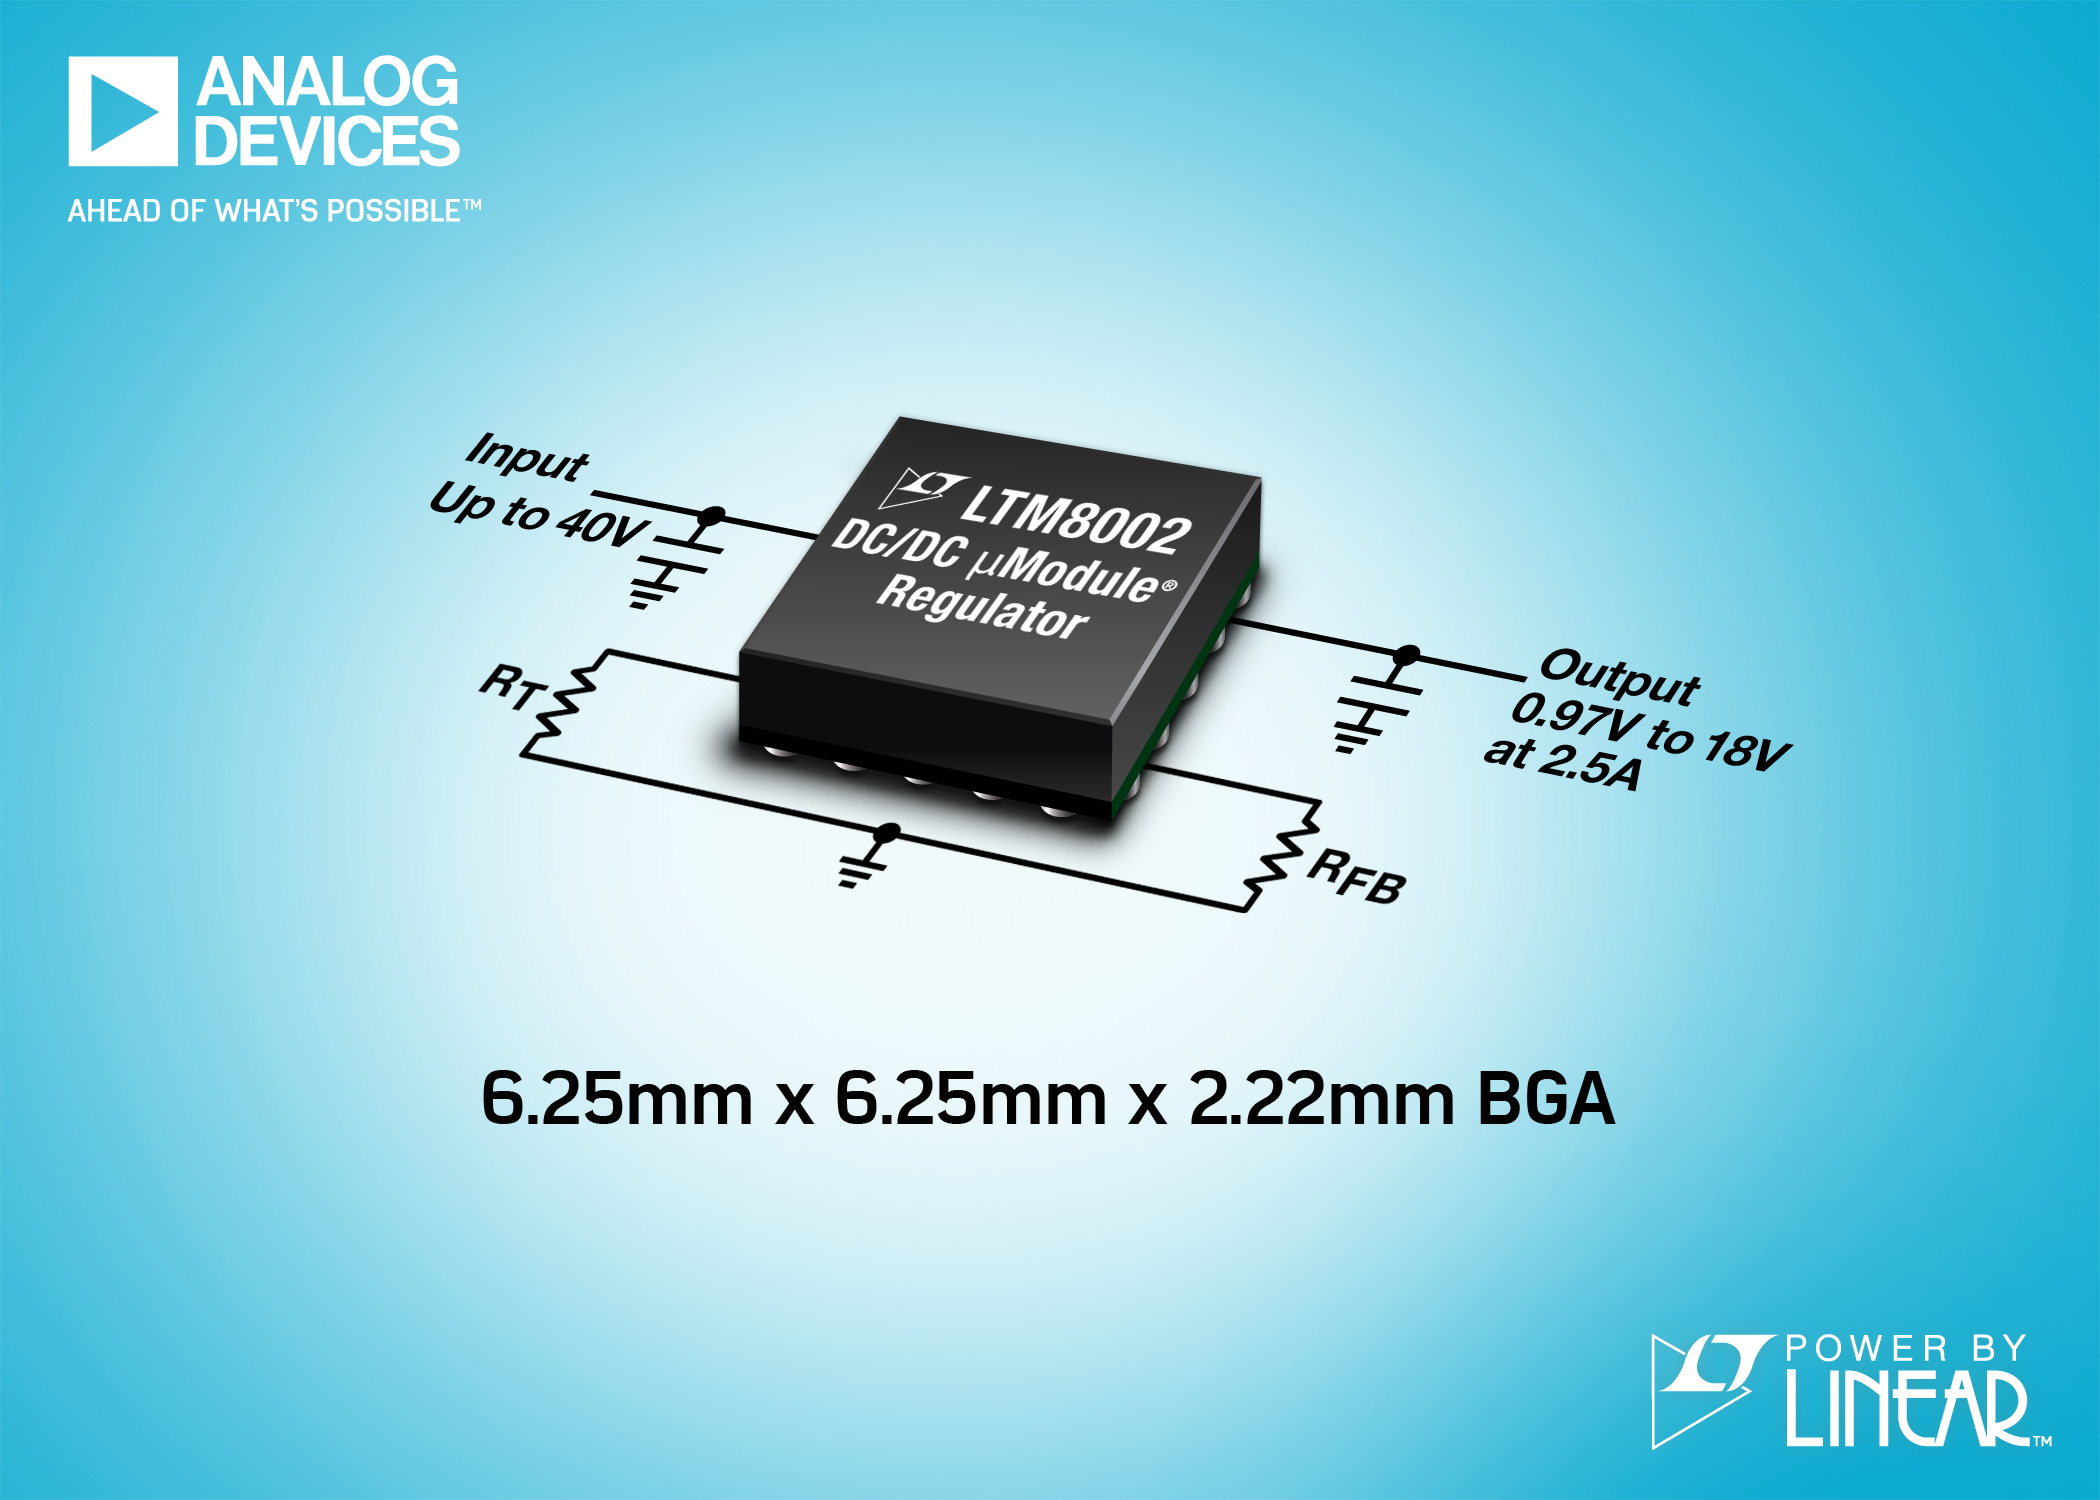 40V, 2.5A µModule Regulator Comes in 6.25mm x 6.25mm BGA Package